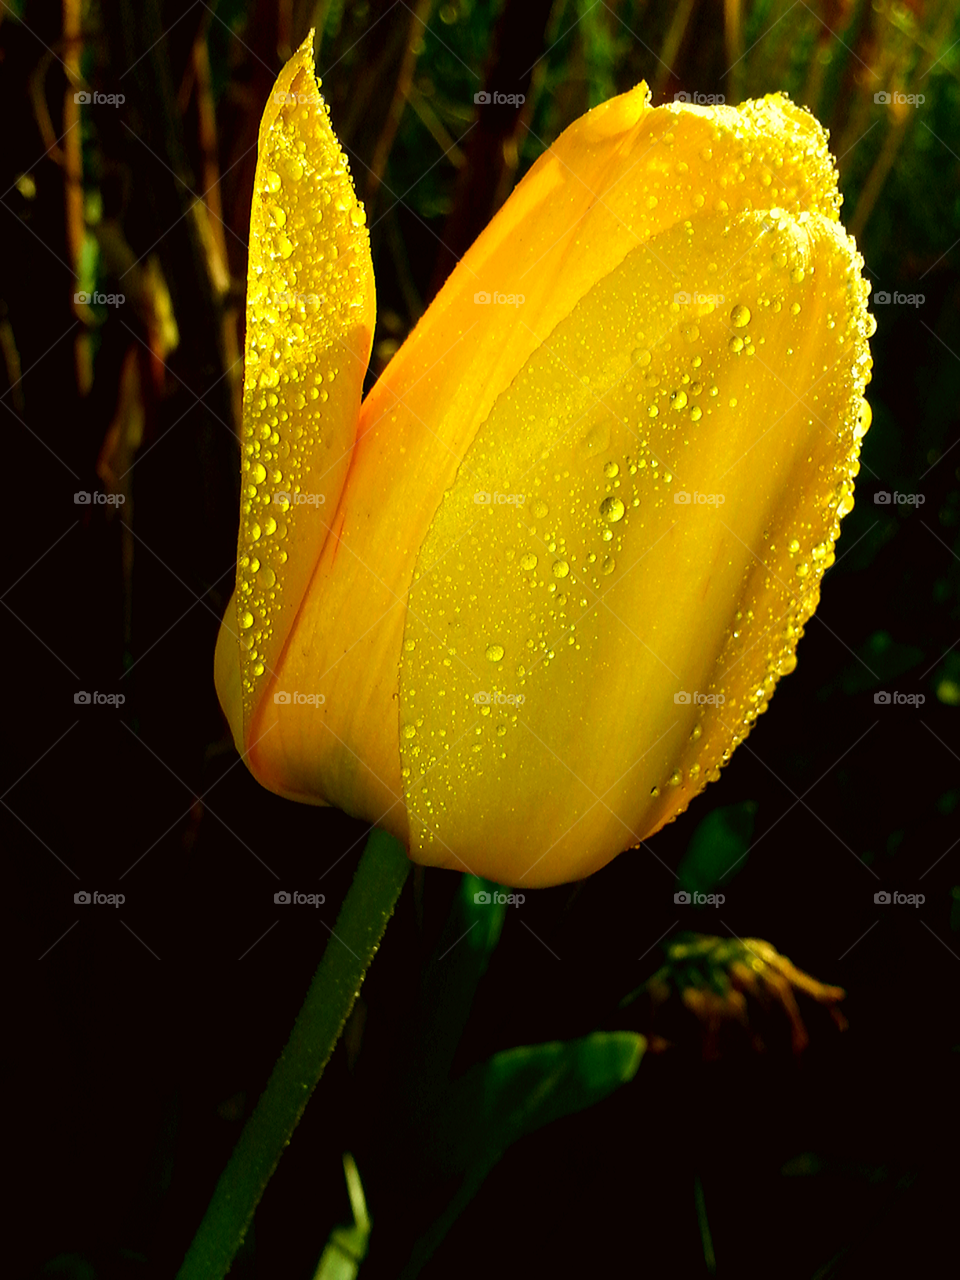 Burst of Yellow. Gorgeous tulip in my garden. Just enjoying the beauty around me.